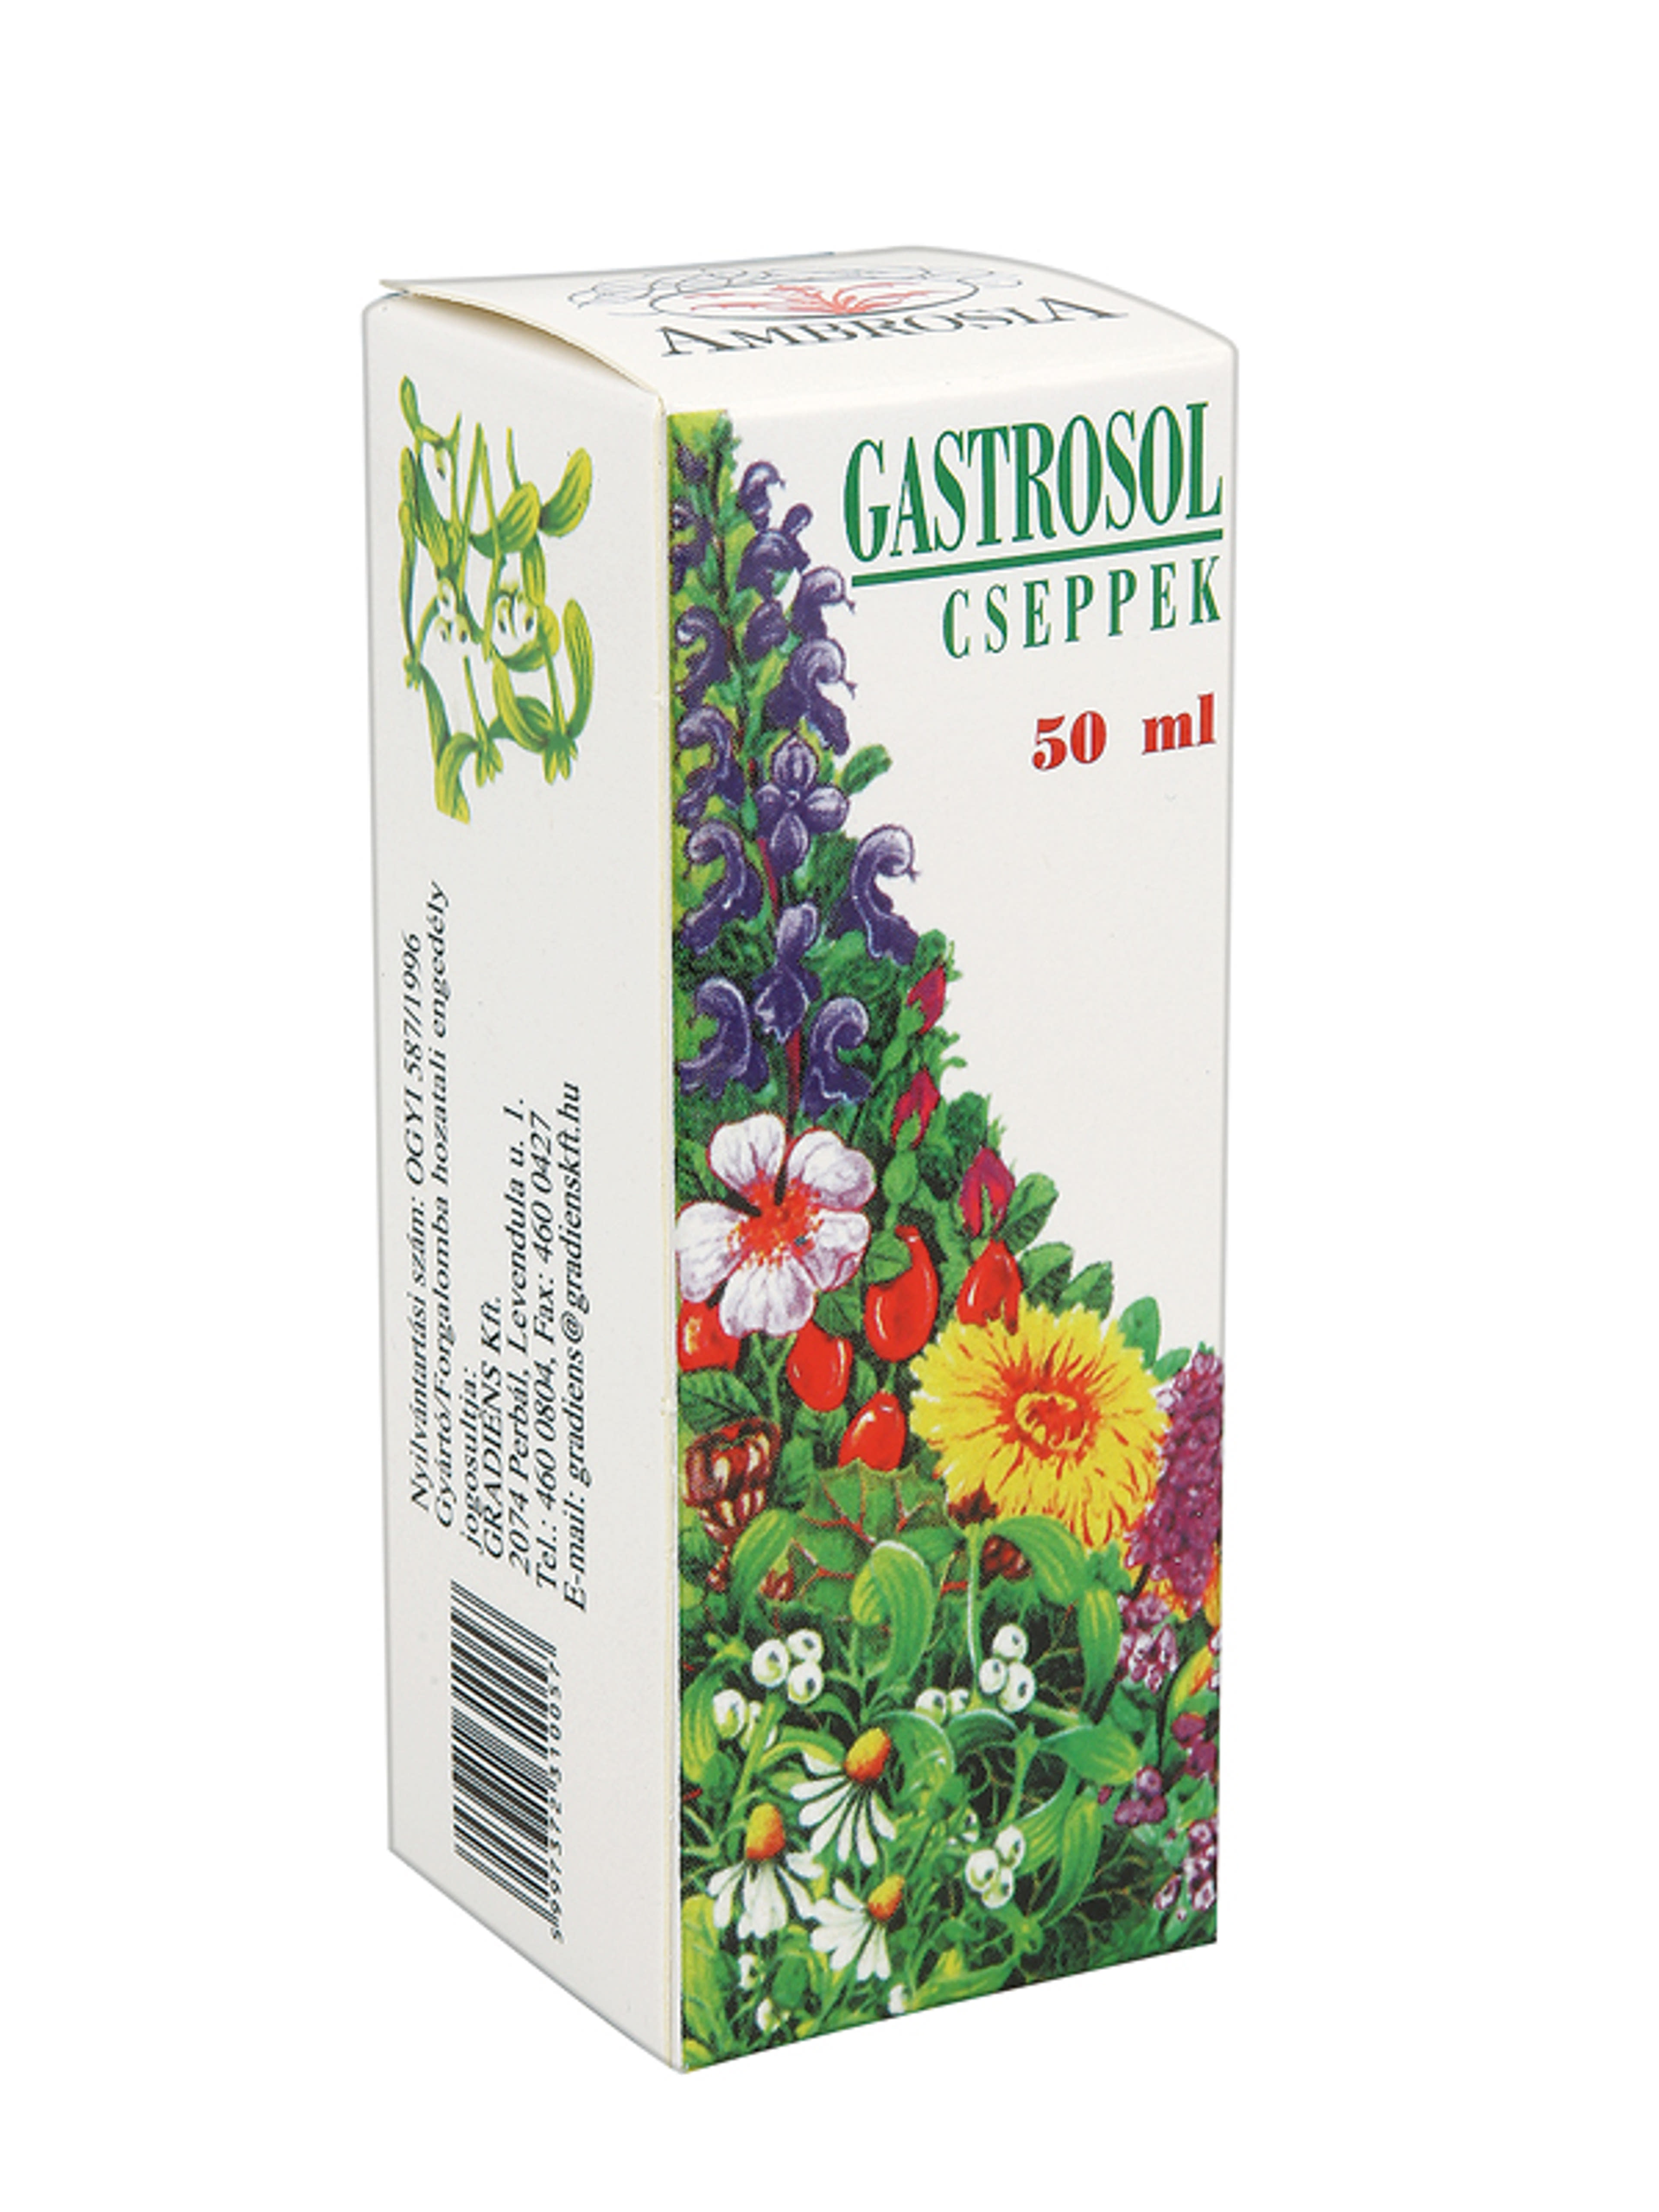 Ambrosia Gastrosol Csepp - 50 ml-1